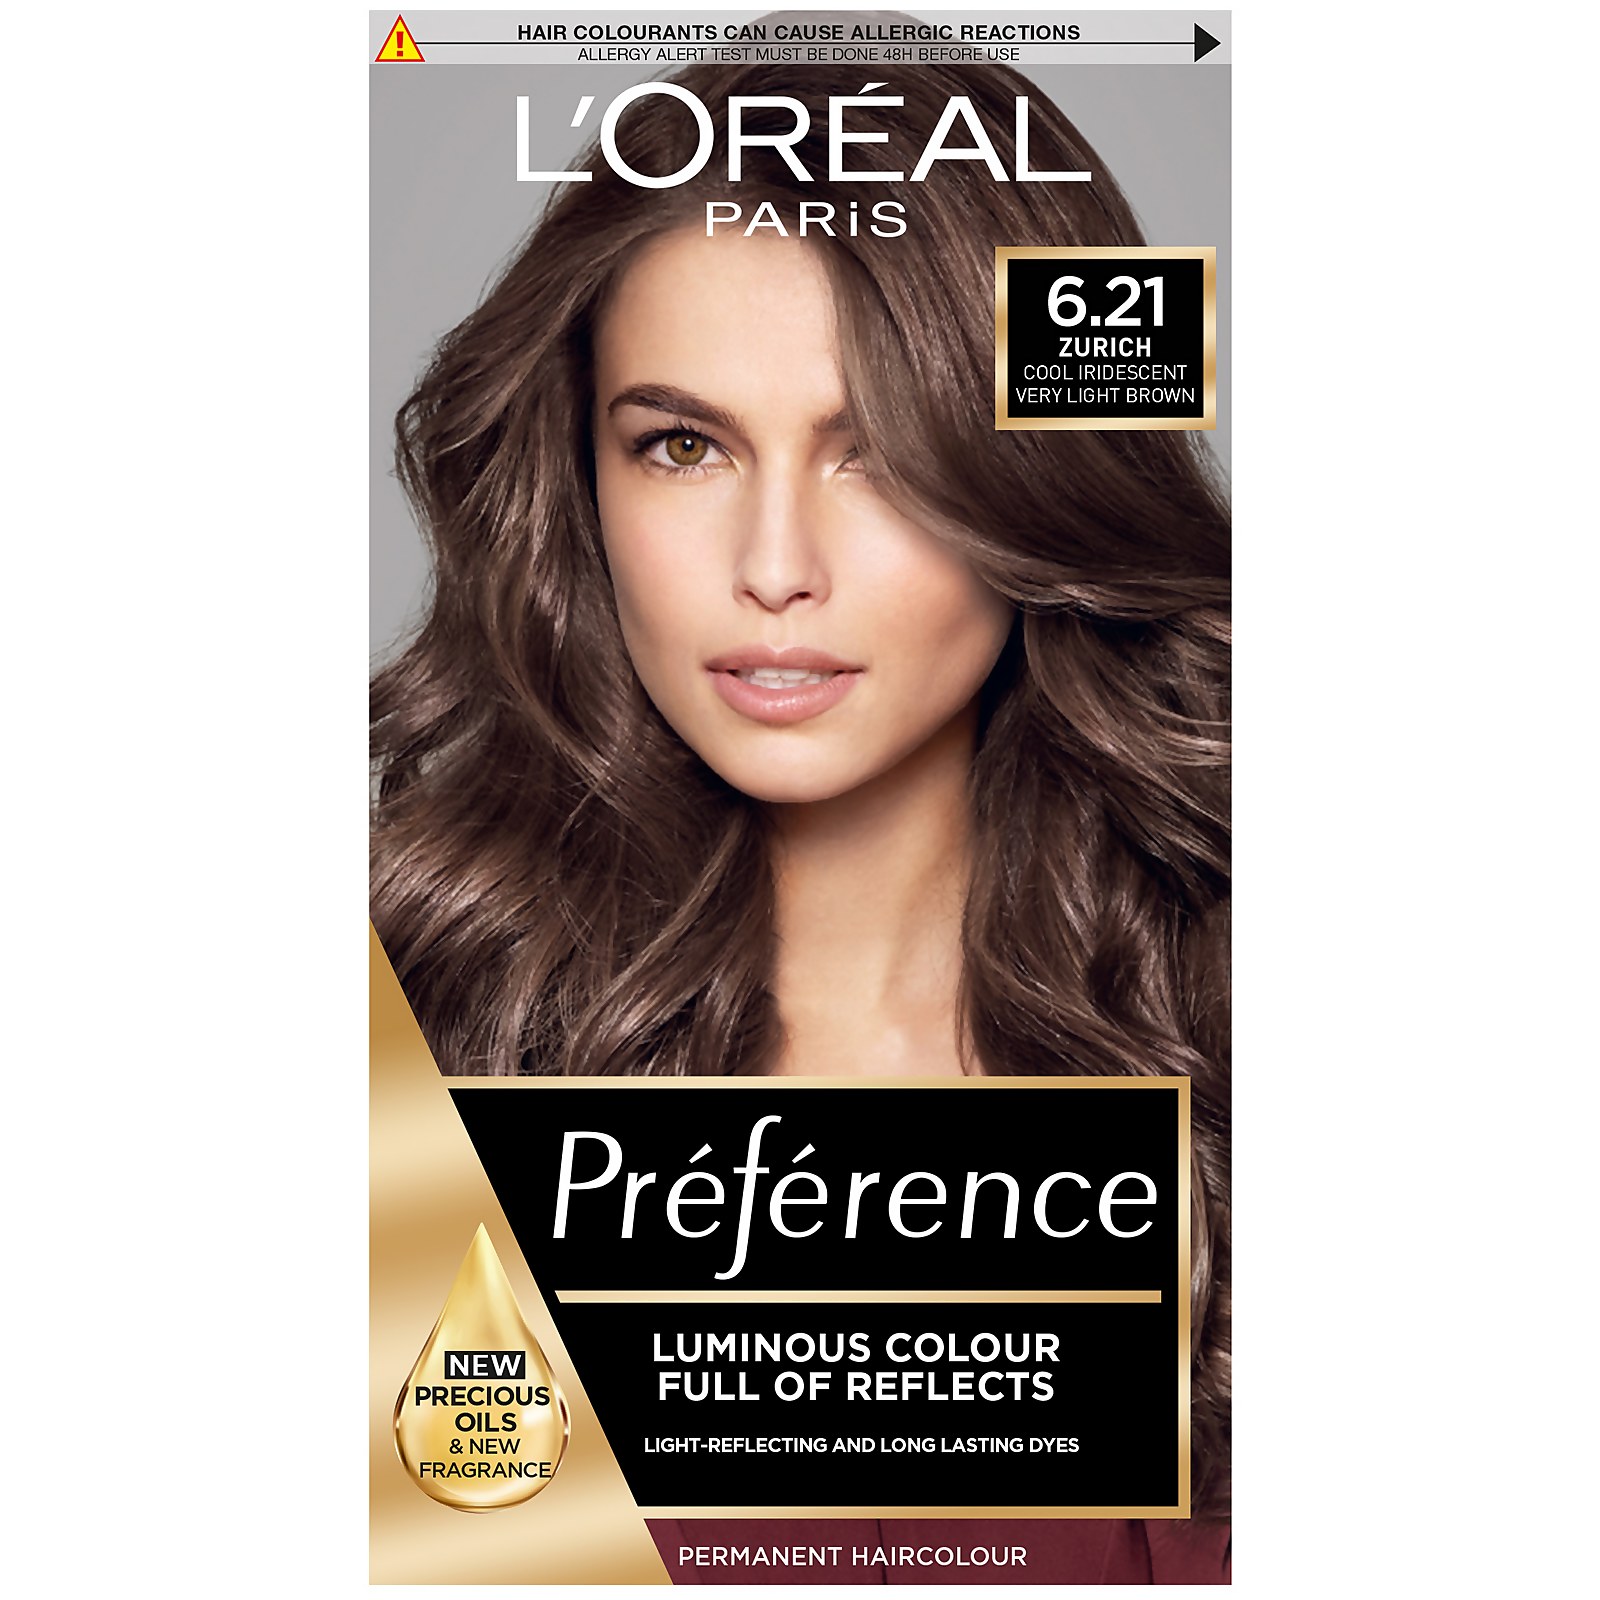 L'Oreal Paris Preference Infinia Hair Dye (Various Shades) - 6.21 Opera Iridescent Light Brown